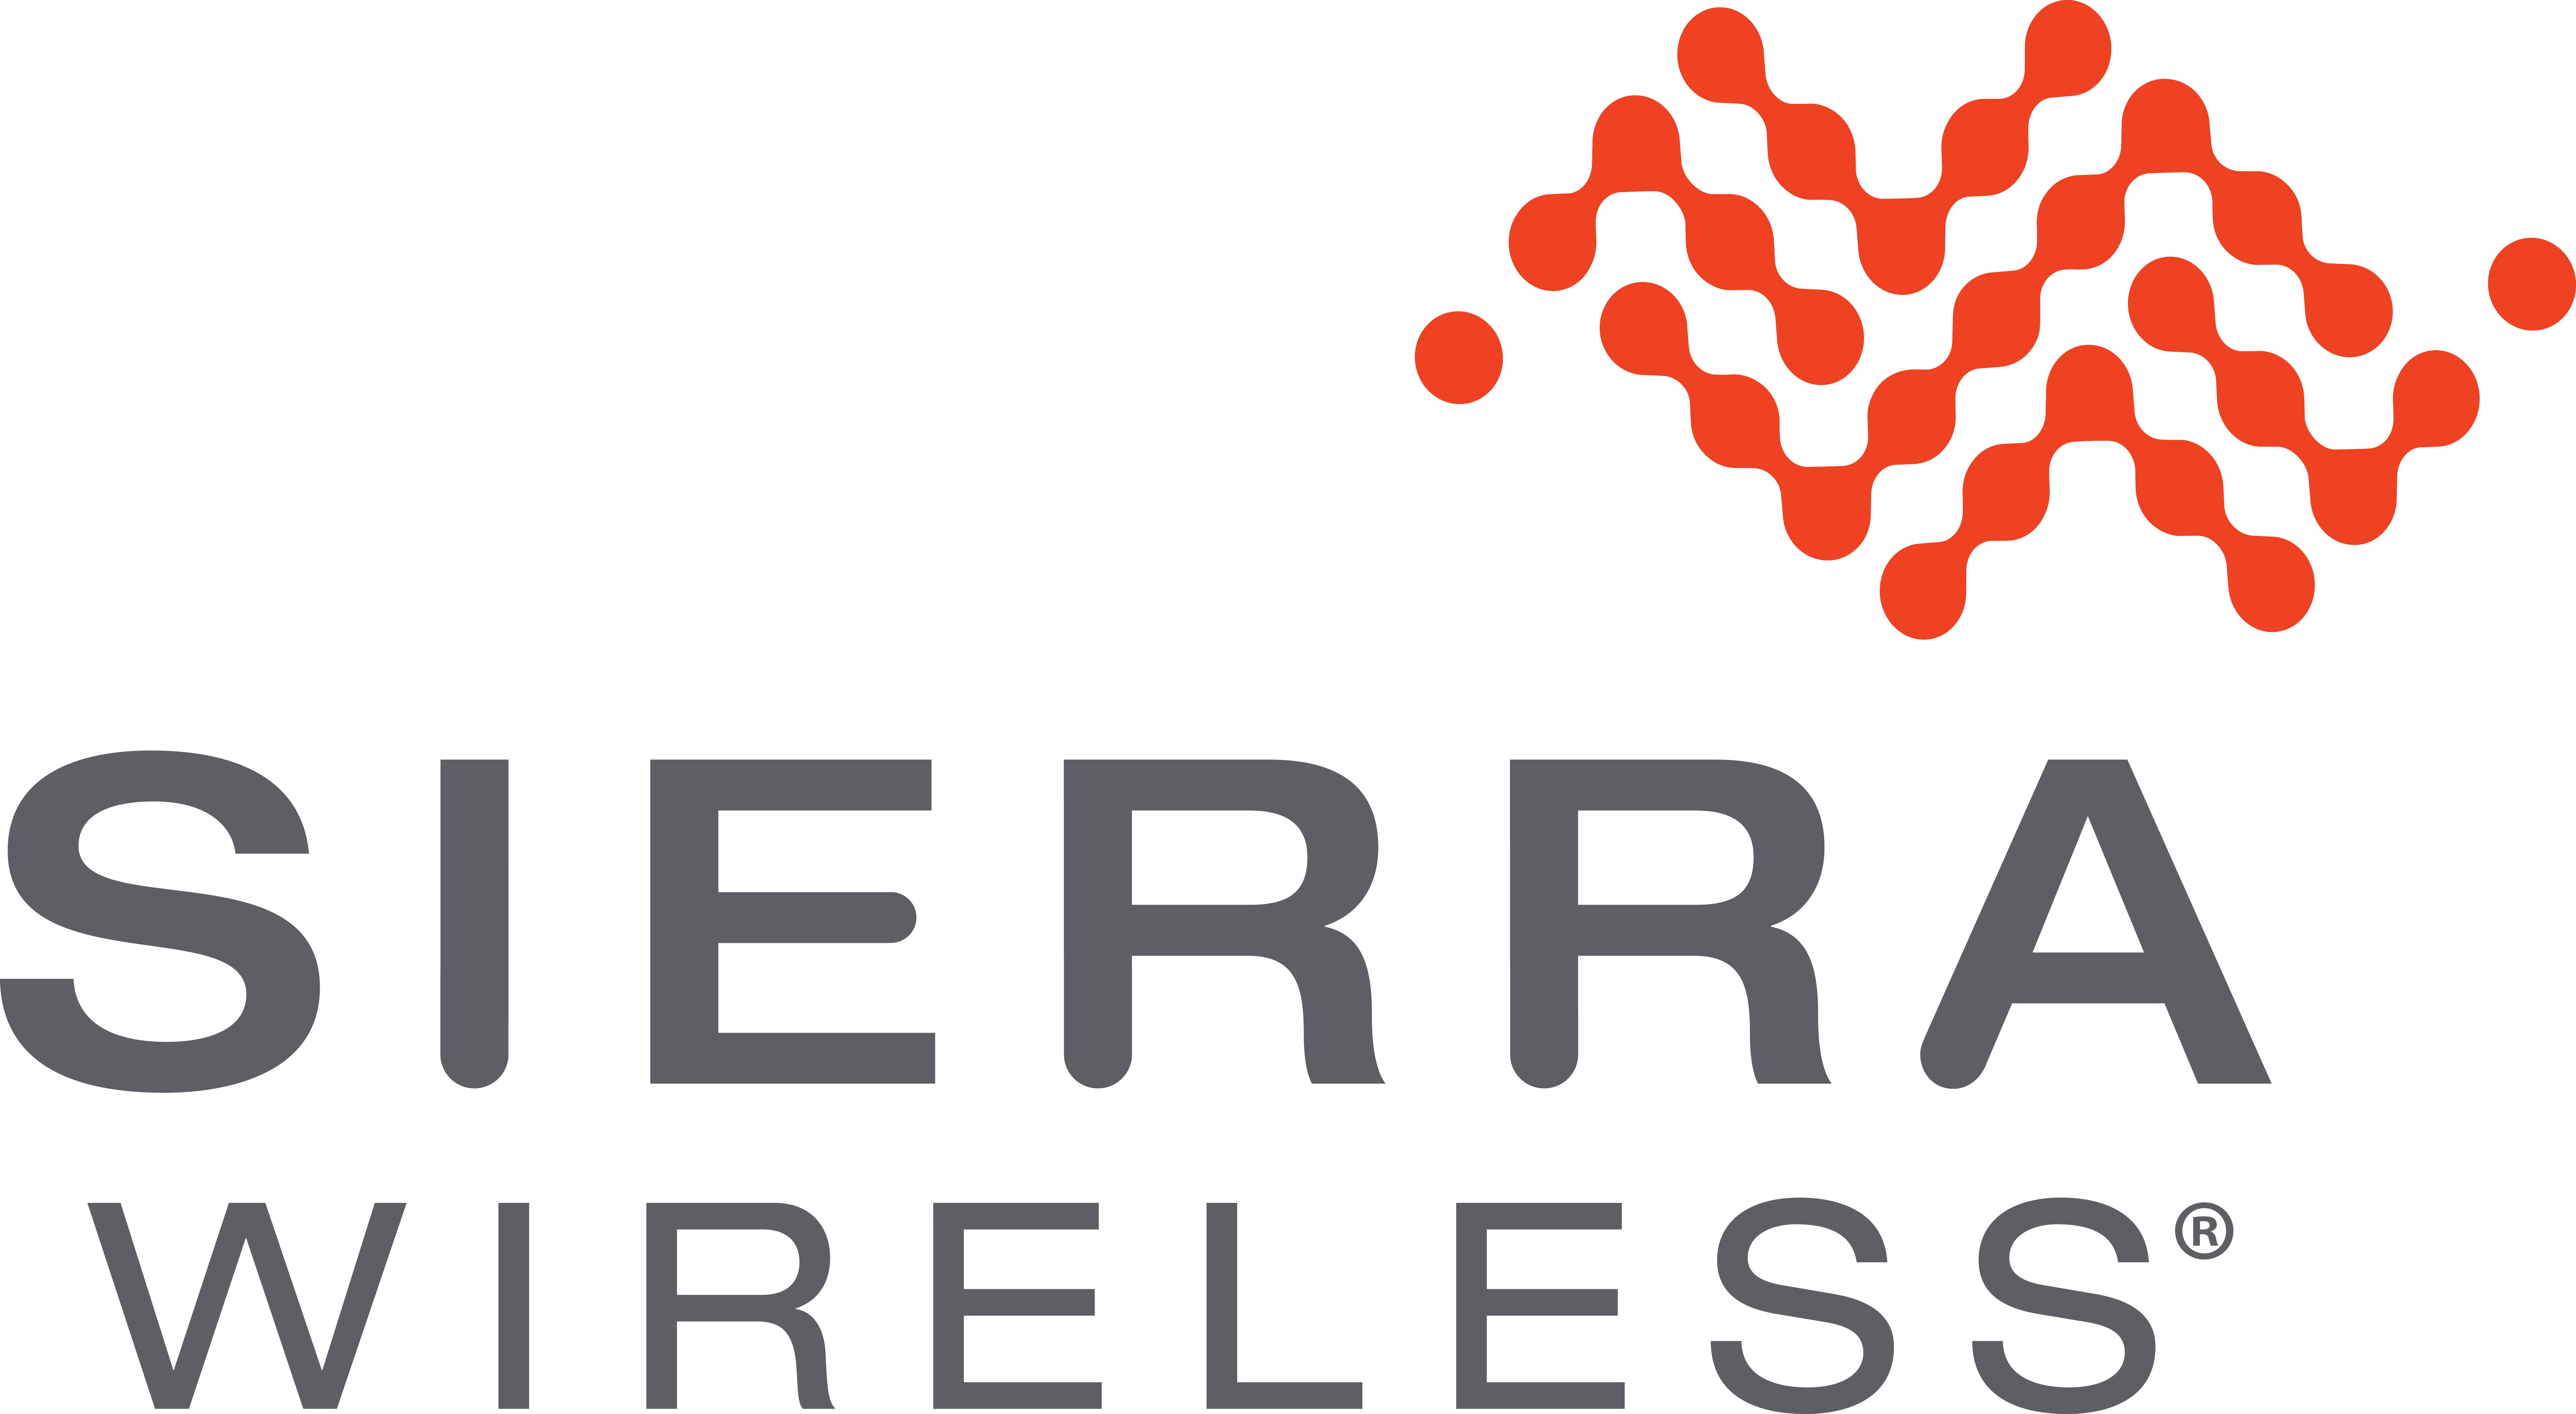 company logo, product images gateways modules sims sierra wireless #32527